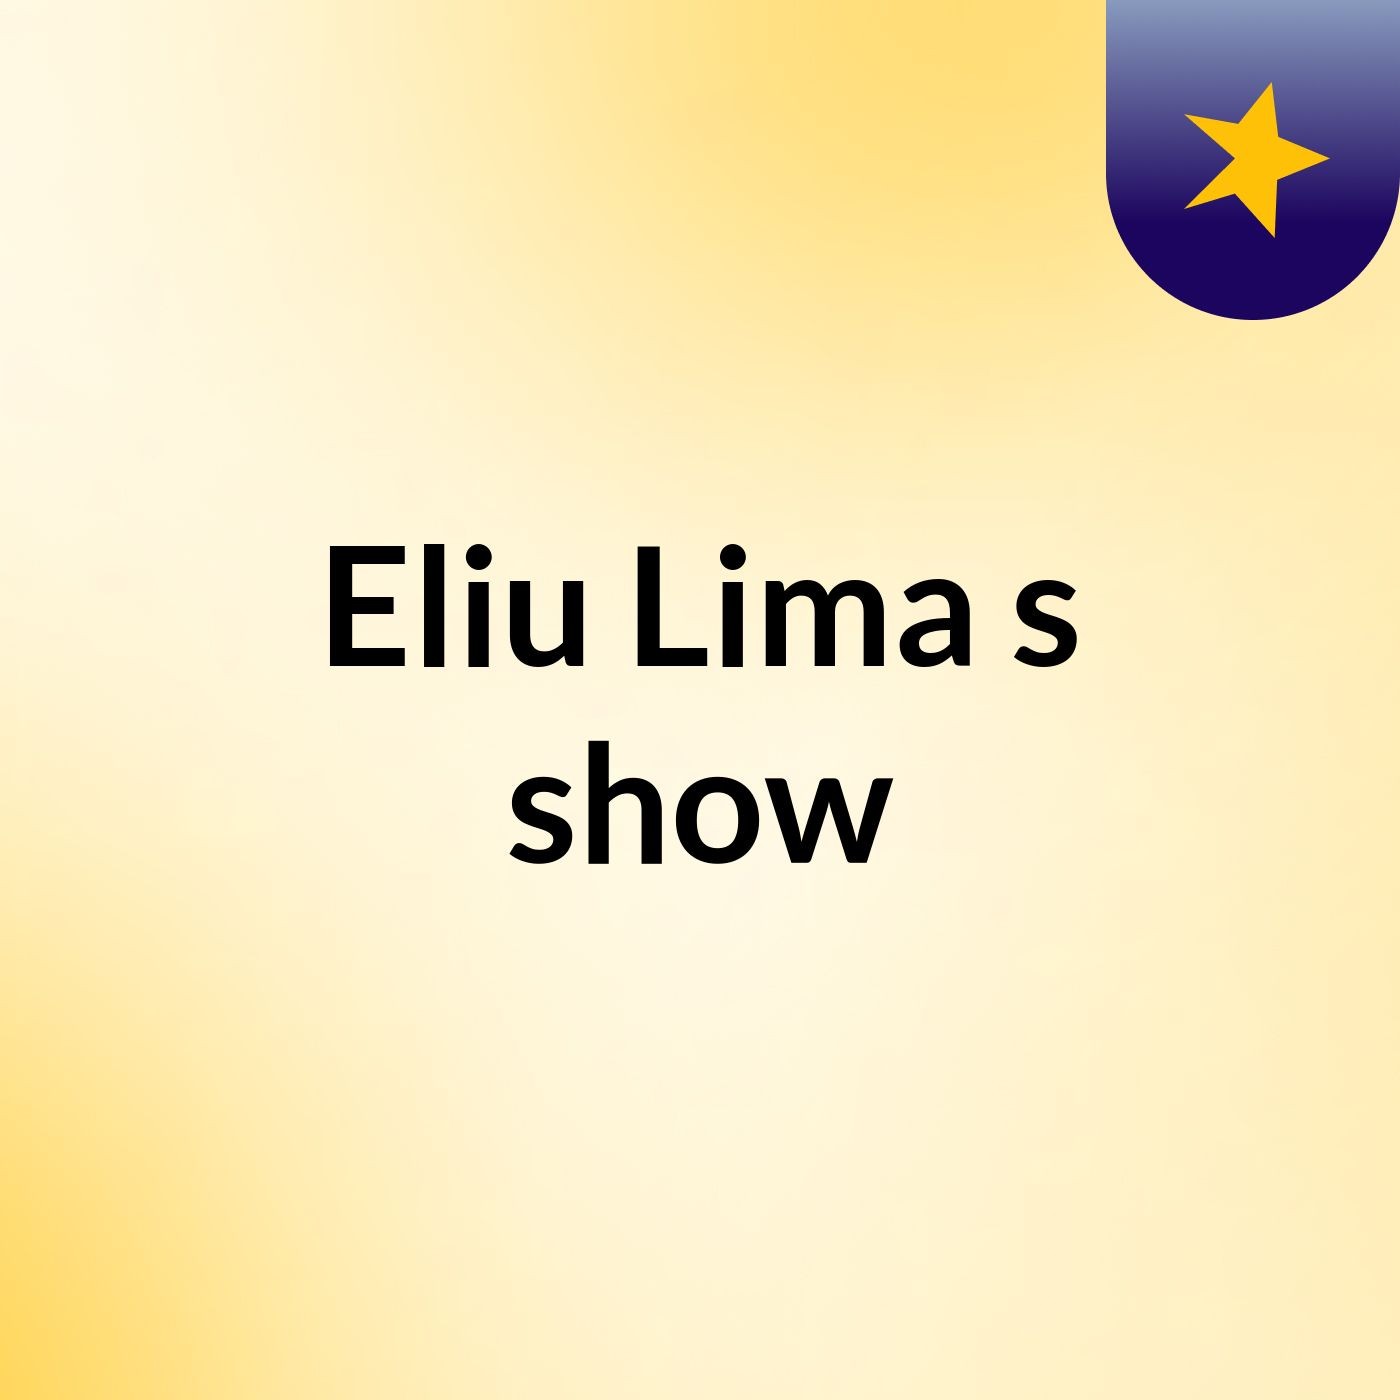 Eliu Lima's show